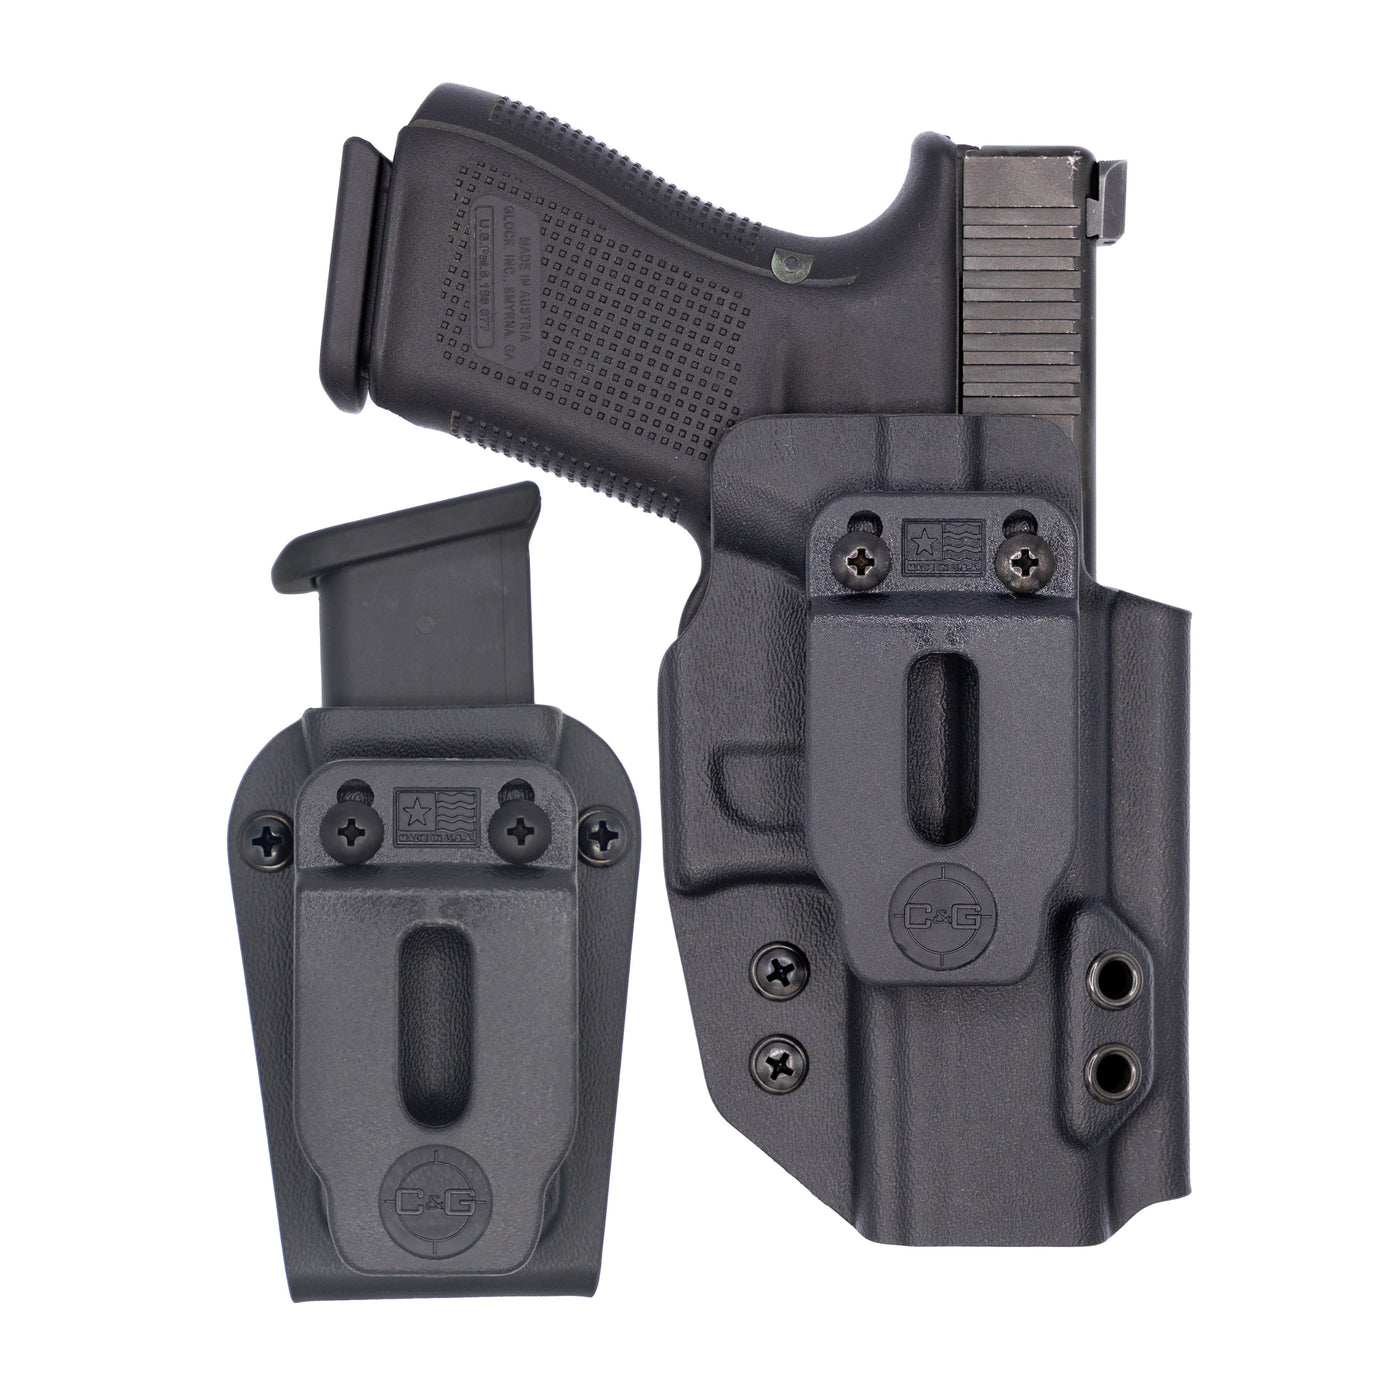 C&G holsters Glock 19 IWB COMBO